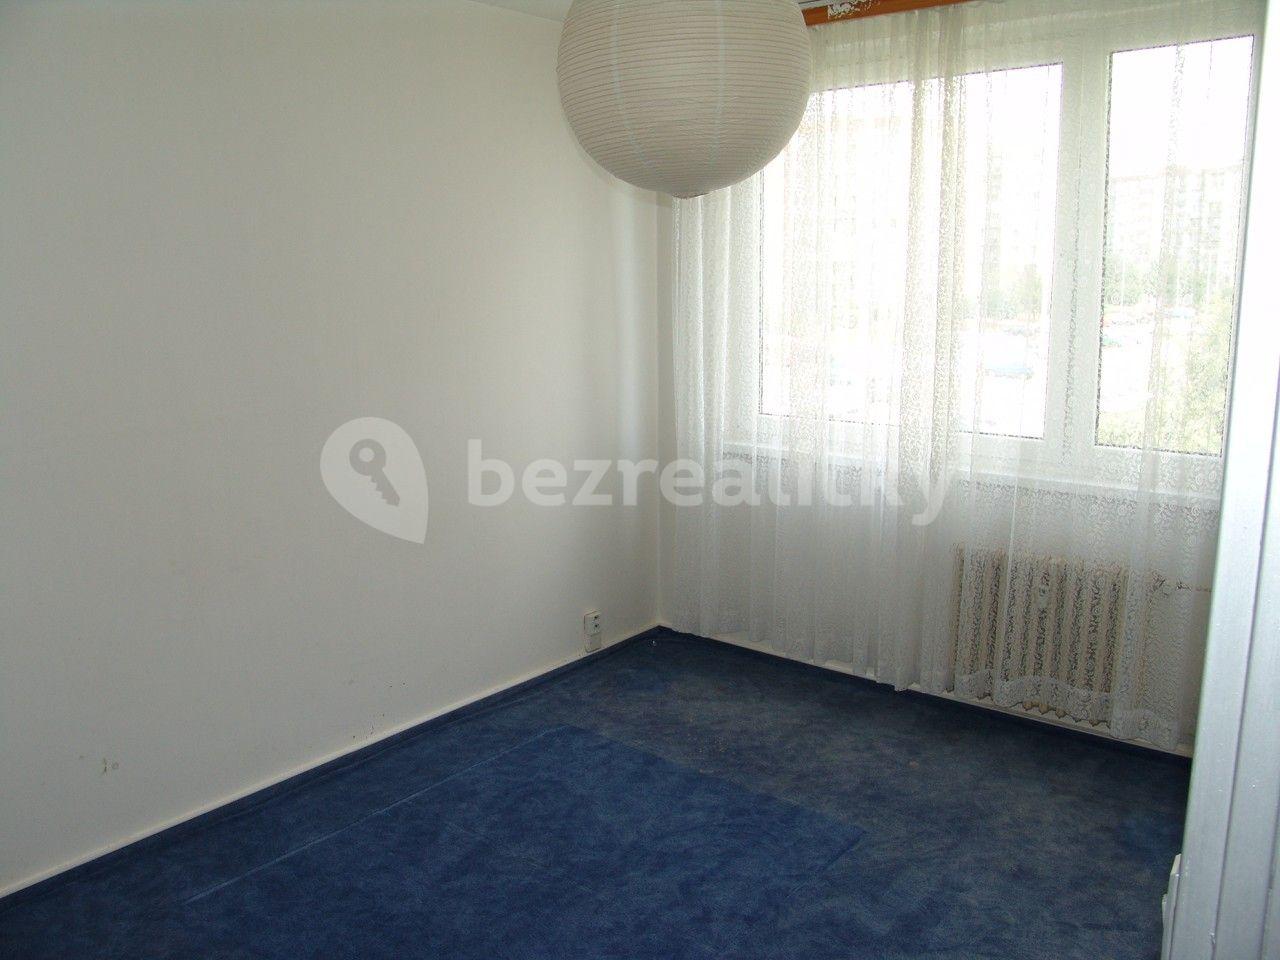 3 bedroom flat for sale, 68 m², Lamačova, Prague, Prague